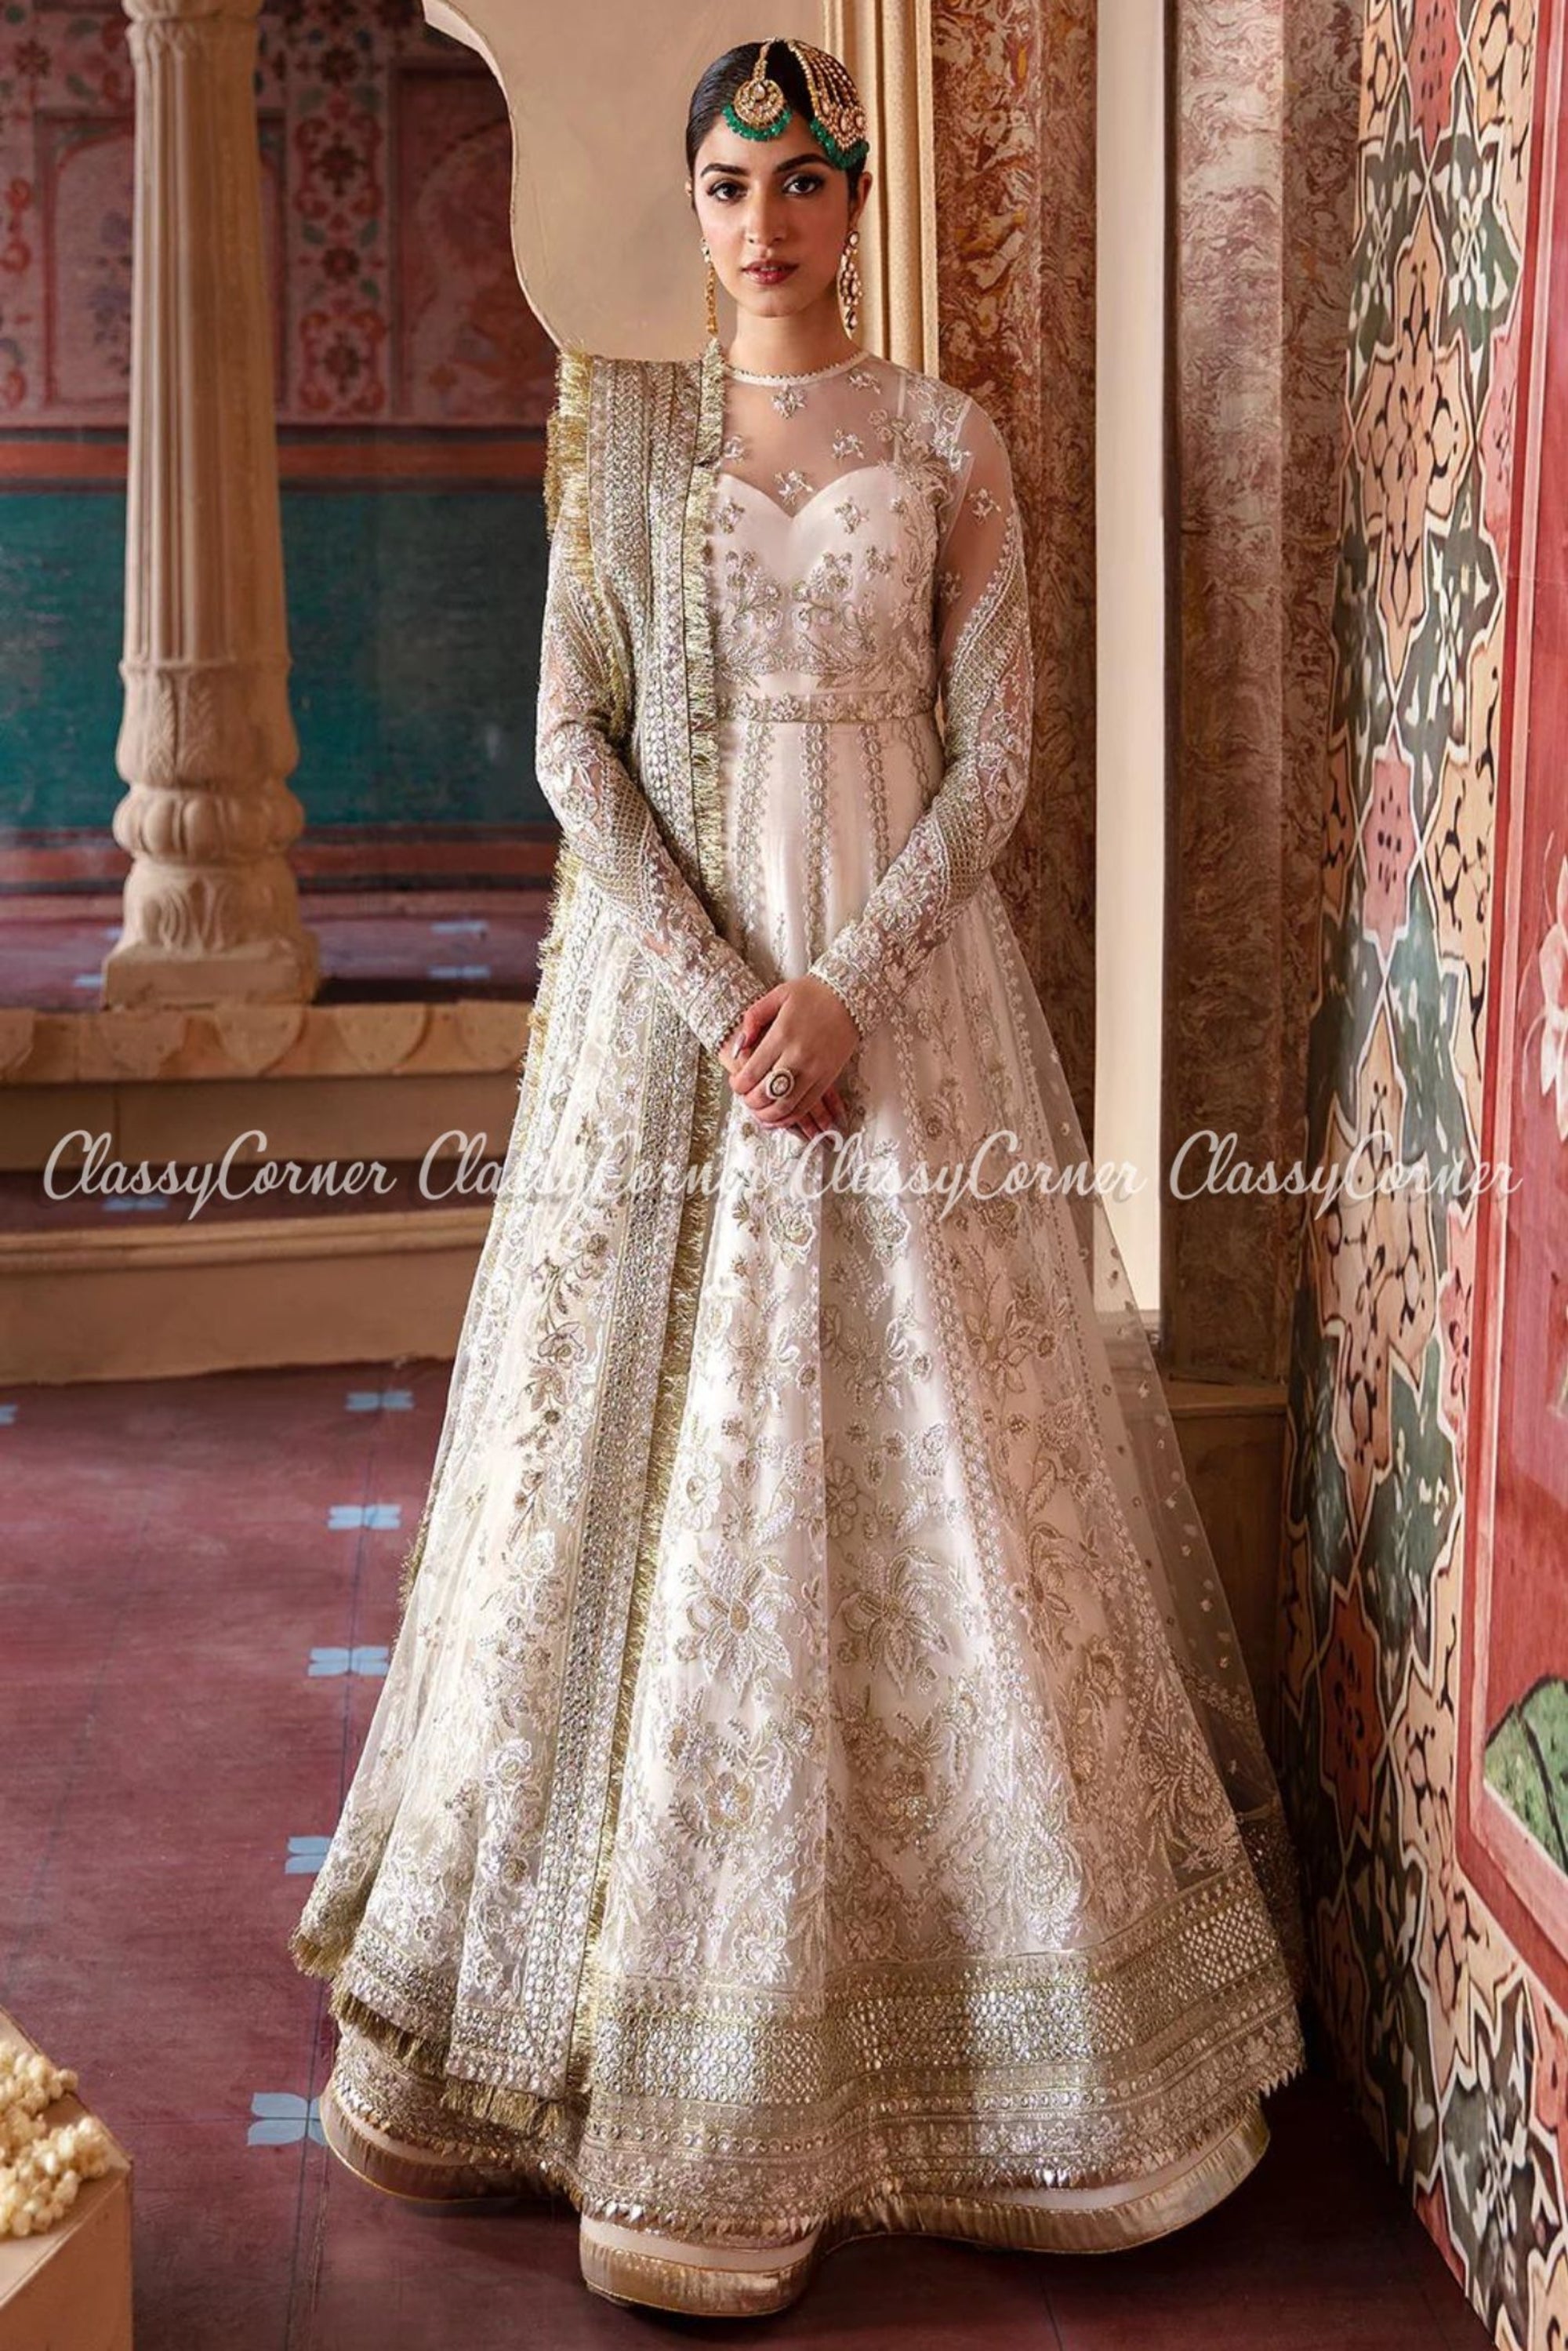 11 New Lehenga Silhouettes For Brides To Rock On Their Mehendi! | Wedding  lehenga designs, Indian bridal dress, Indian dresses traditional